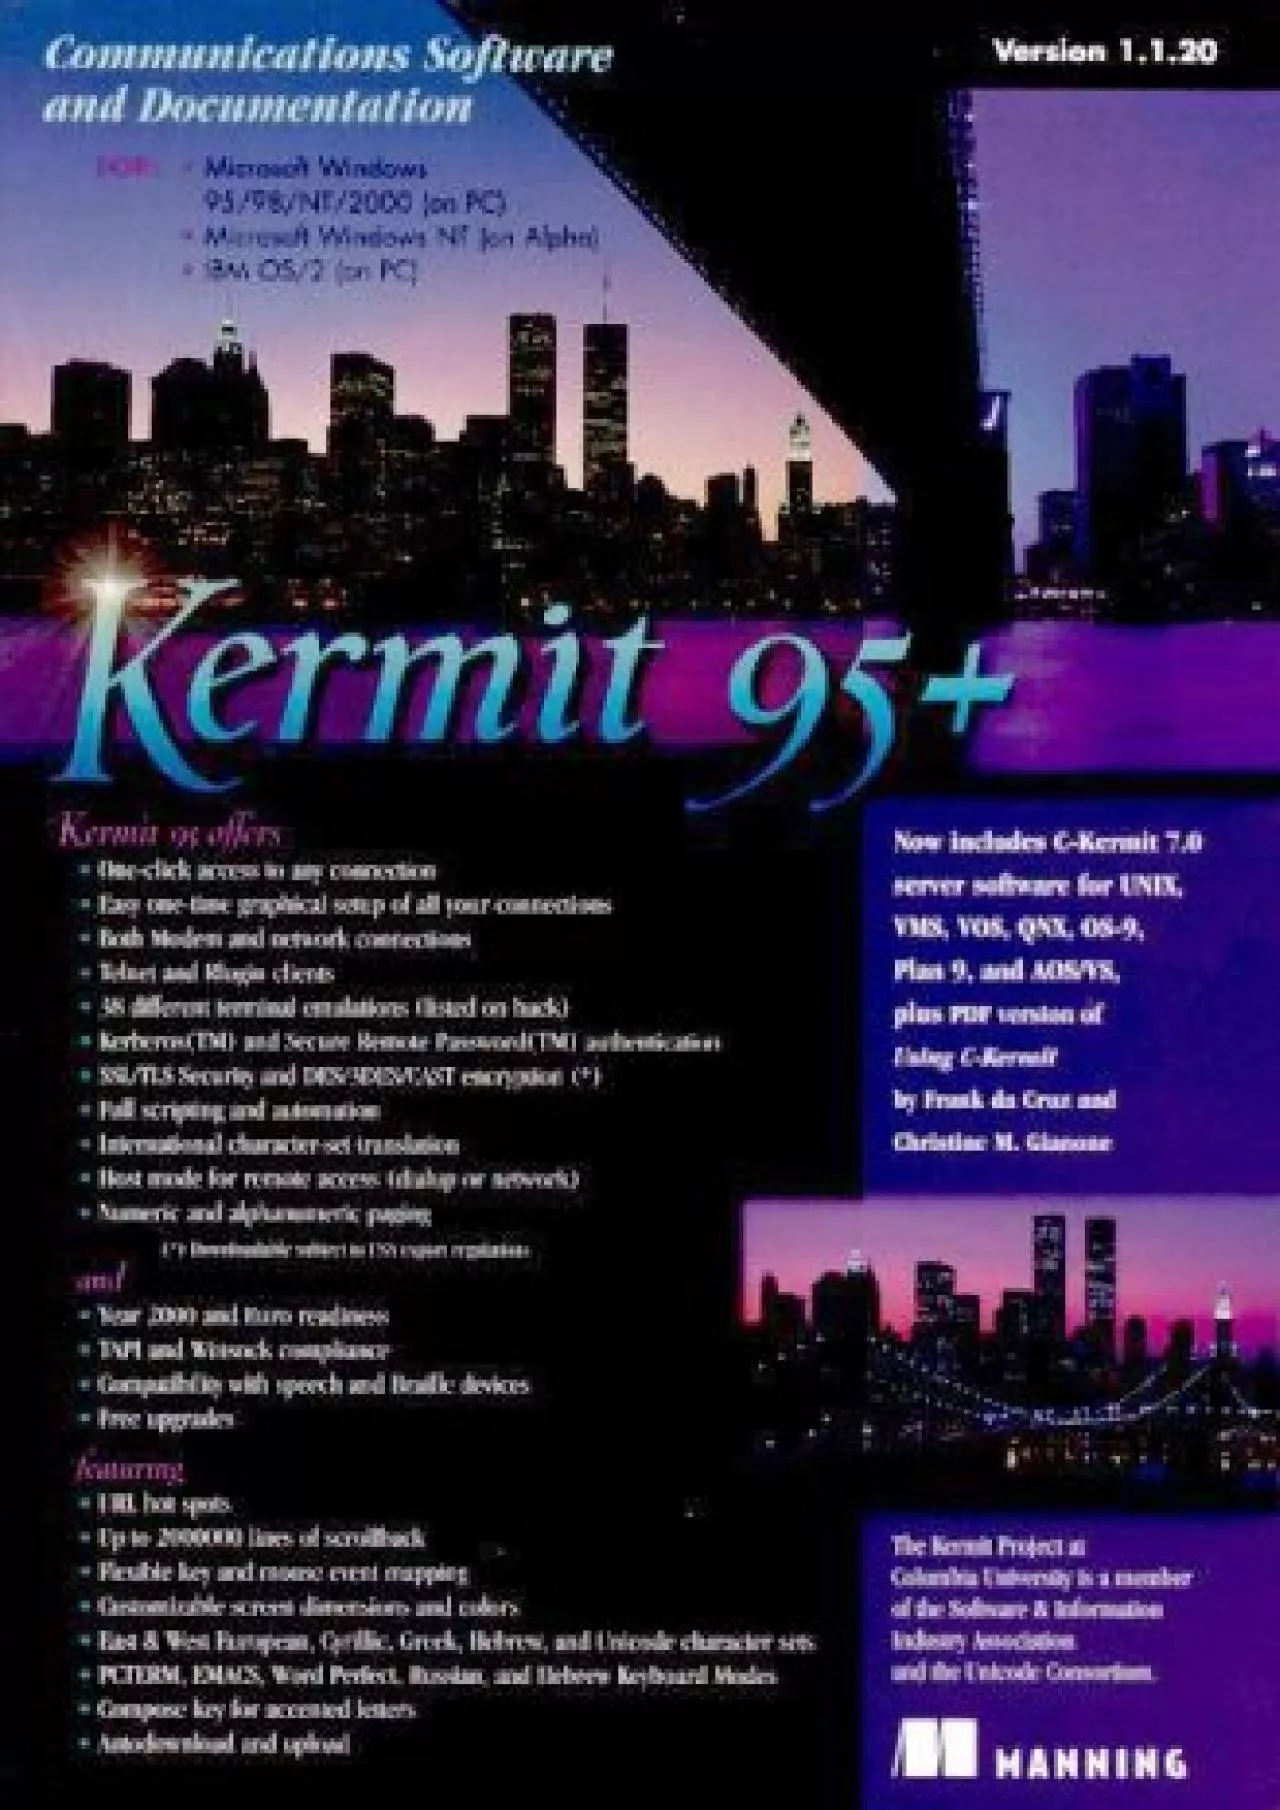 [BEST]-Kermit 95+: Communications Software for Windows 95/98/NT/2000/XP/Vista, Windows